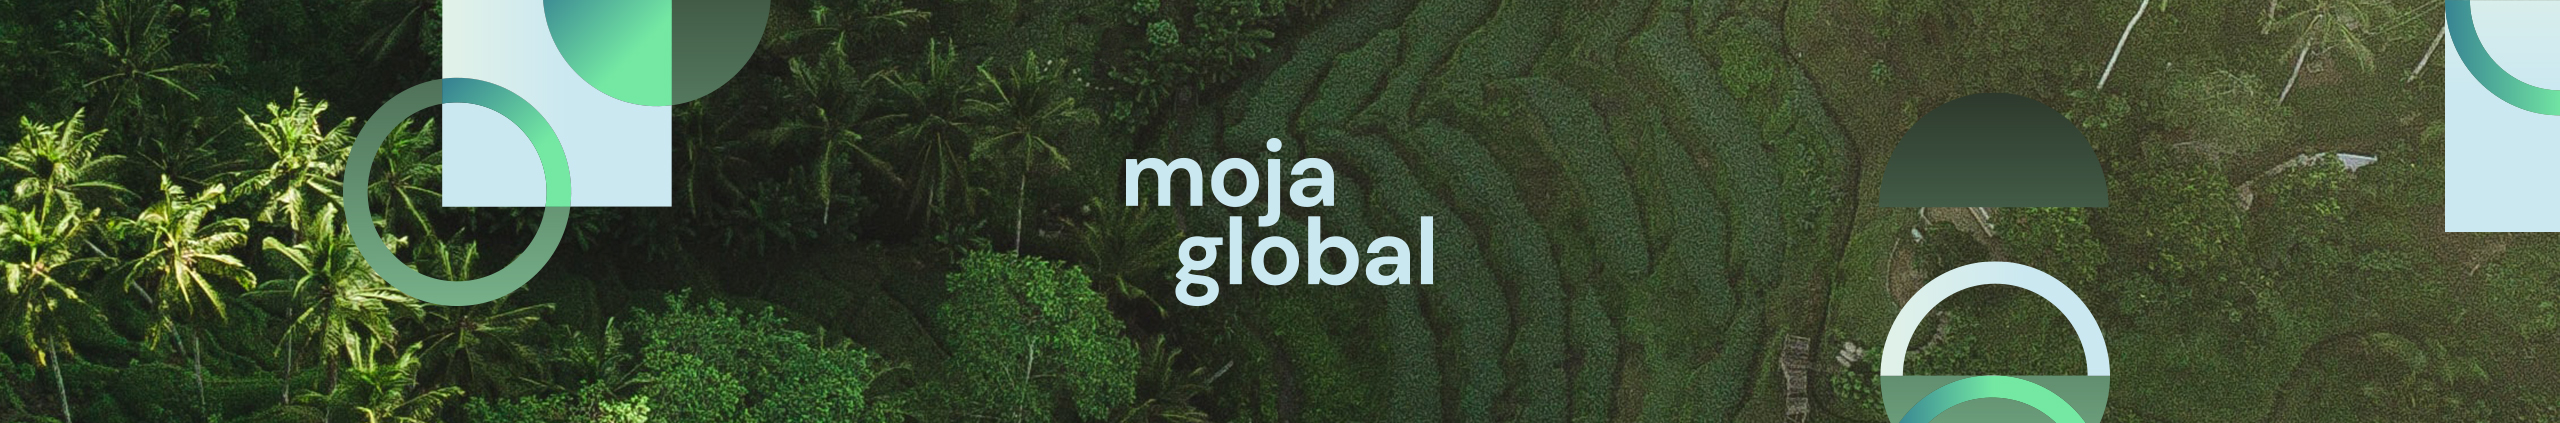 moja-global-banner